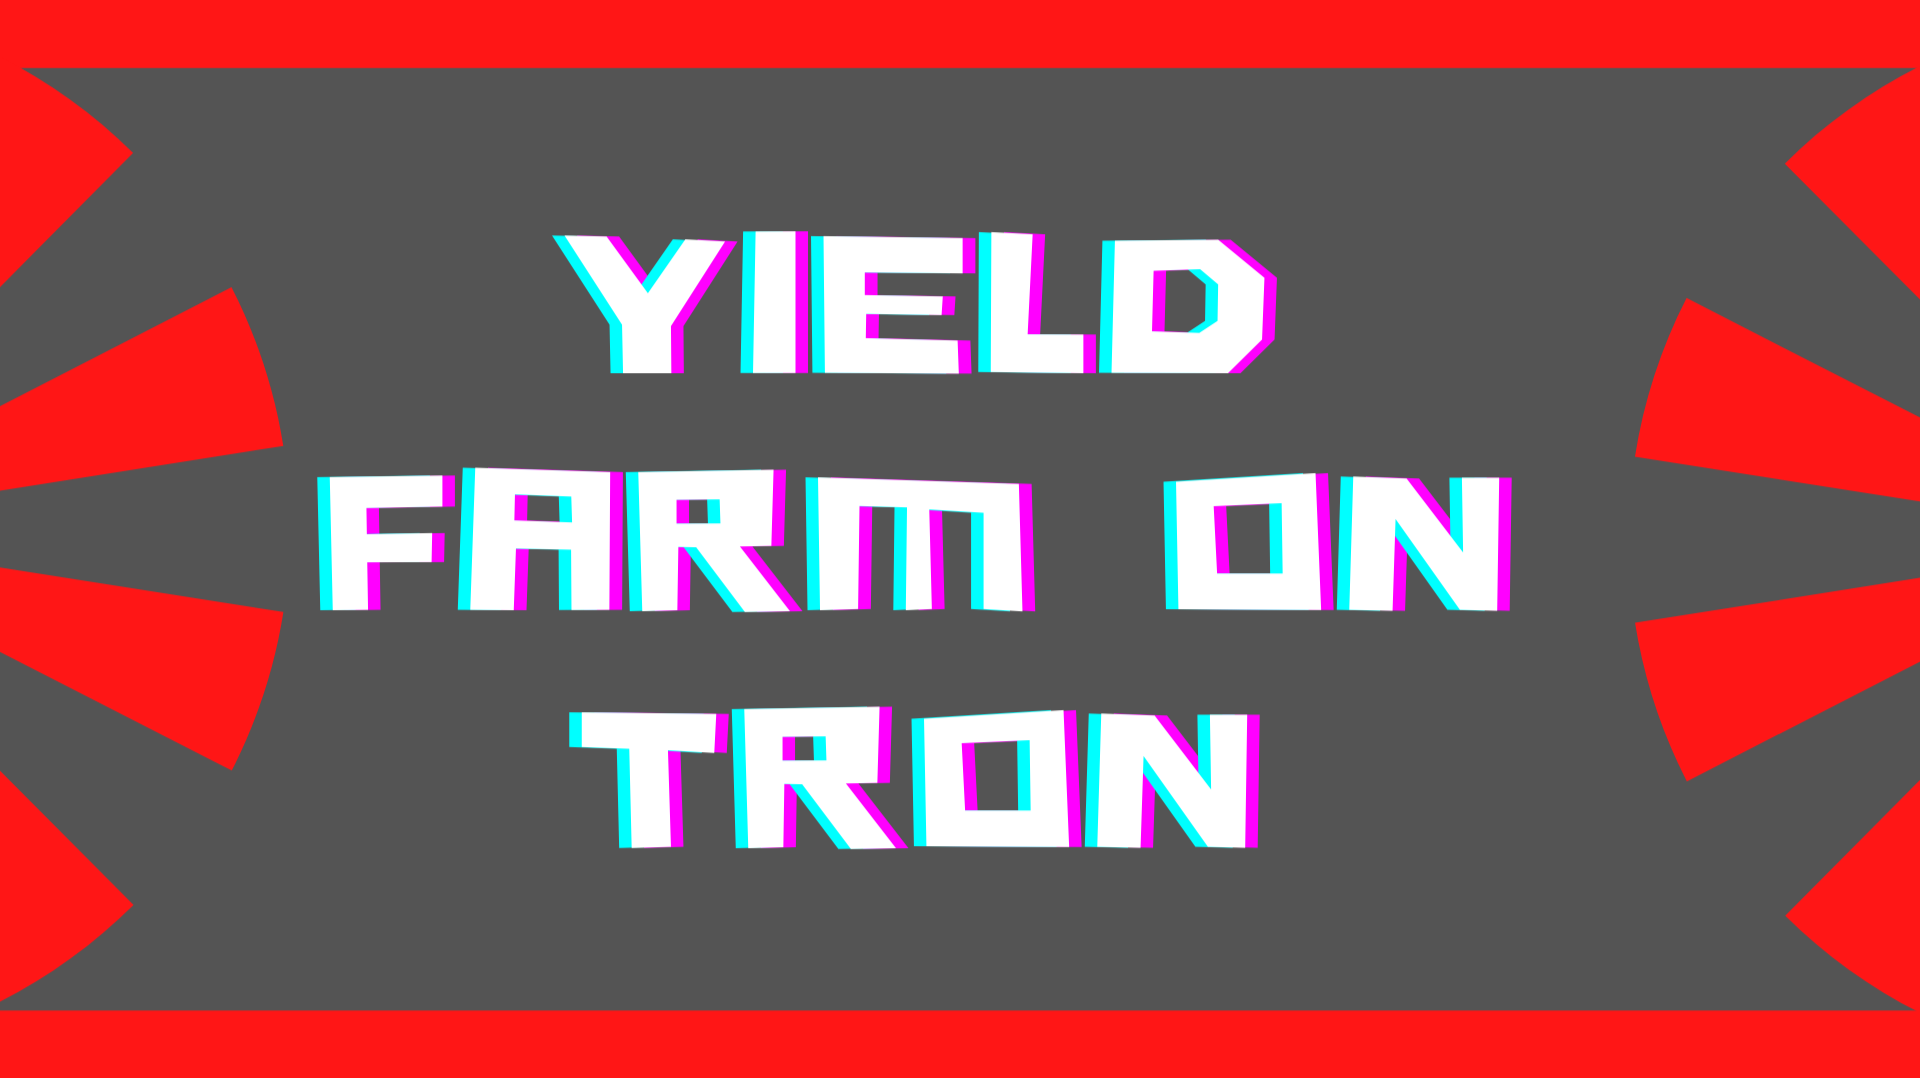 Tron Yield Farming